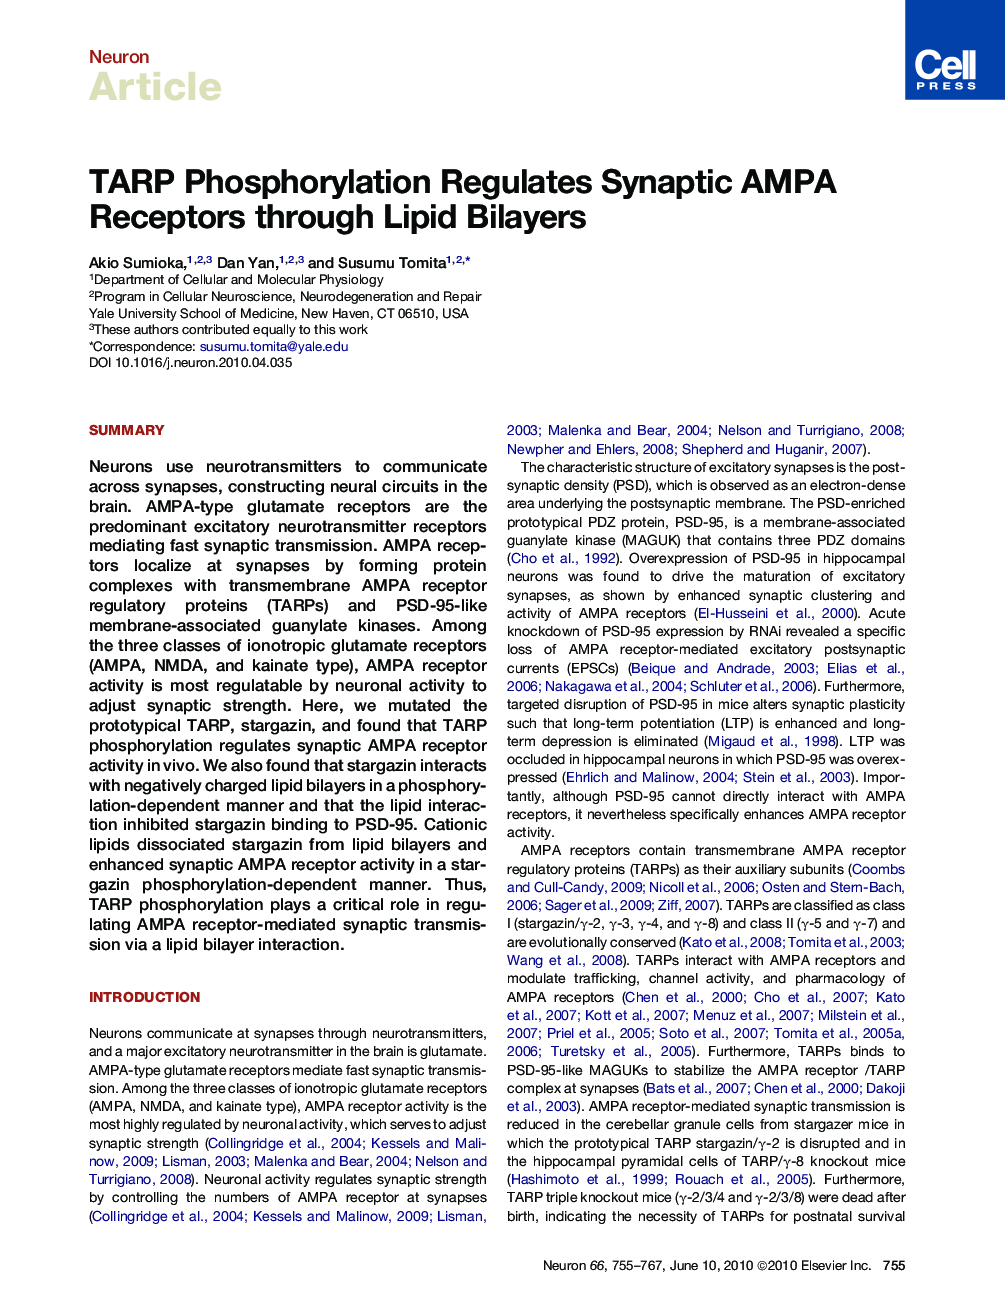 TARP Phosphorylation Regulates Synaptic AMPA Receptors through Lipid Bilayers